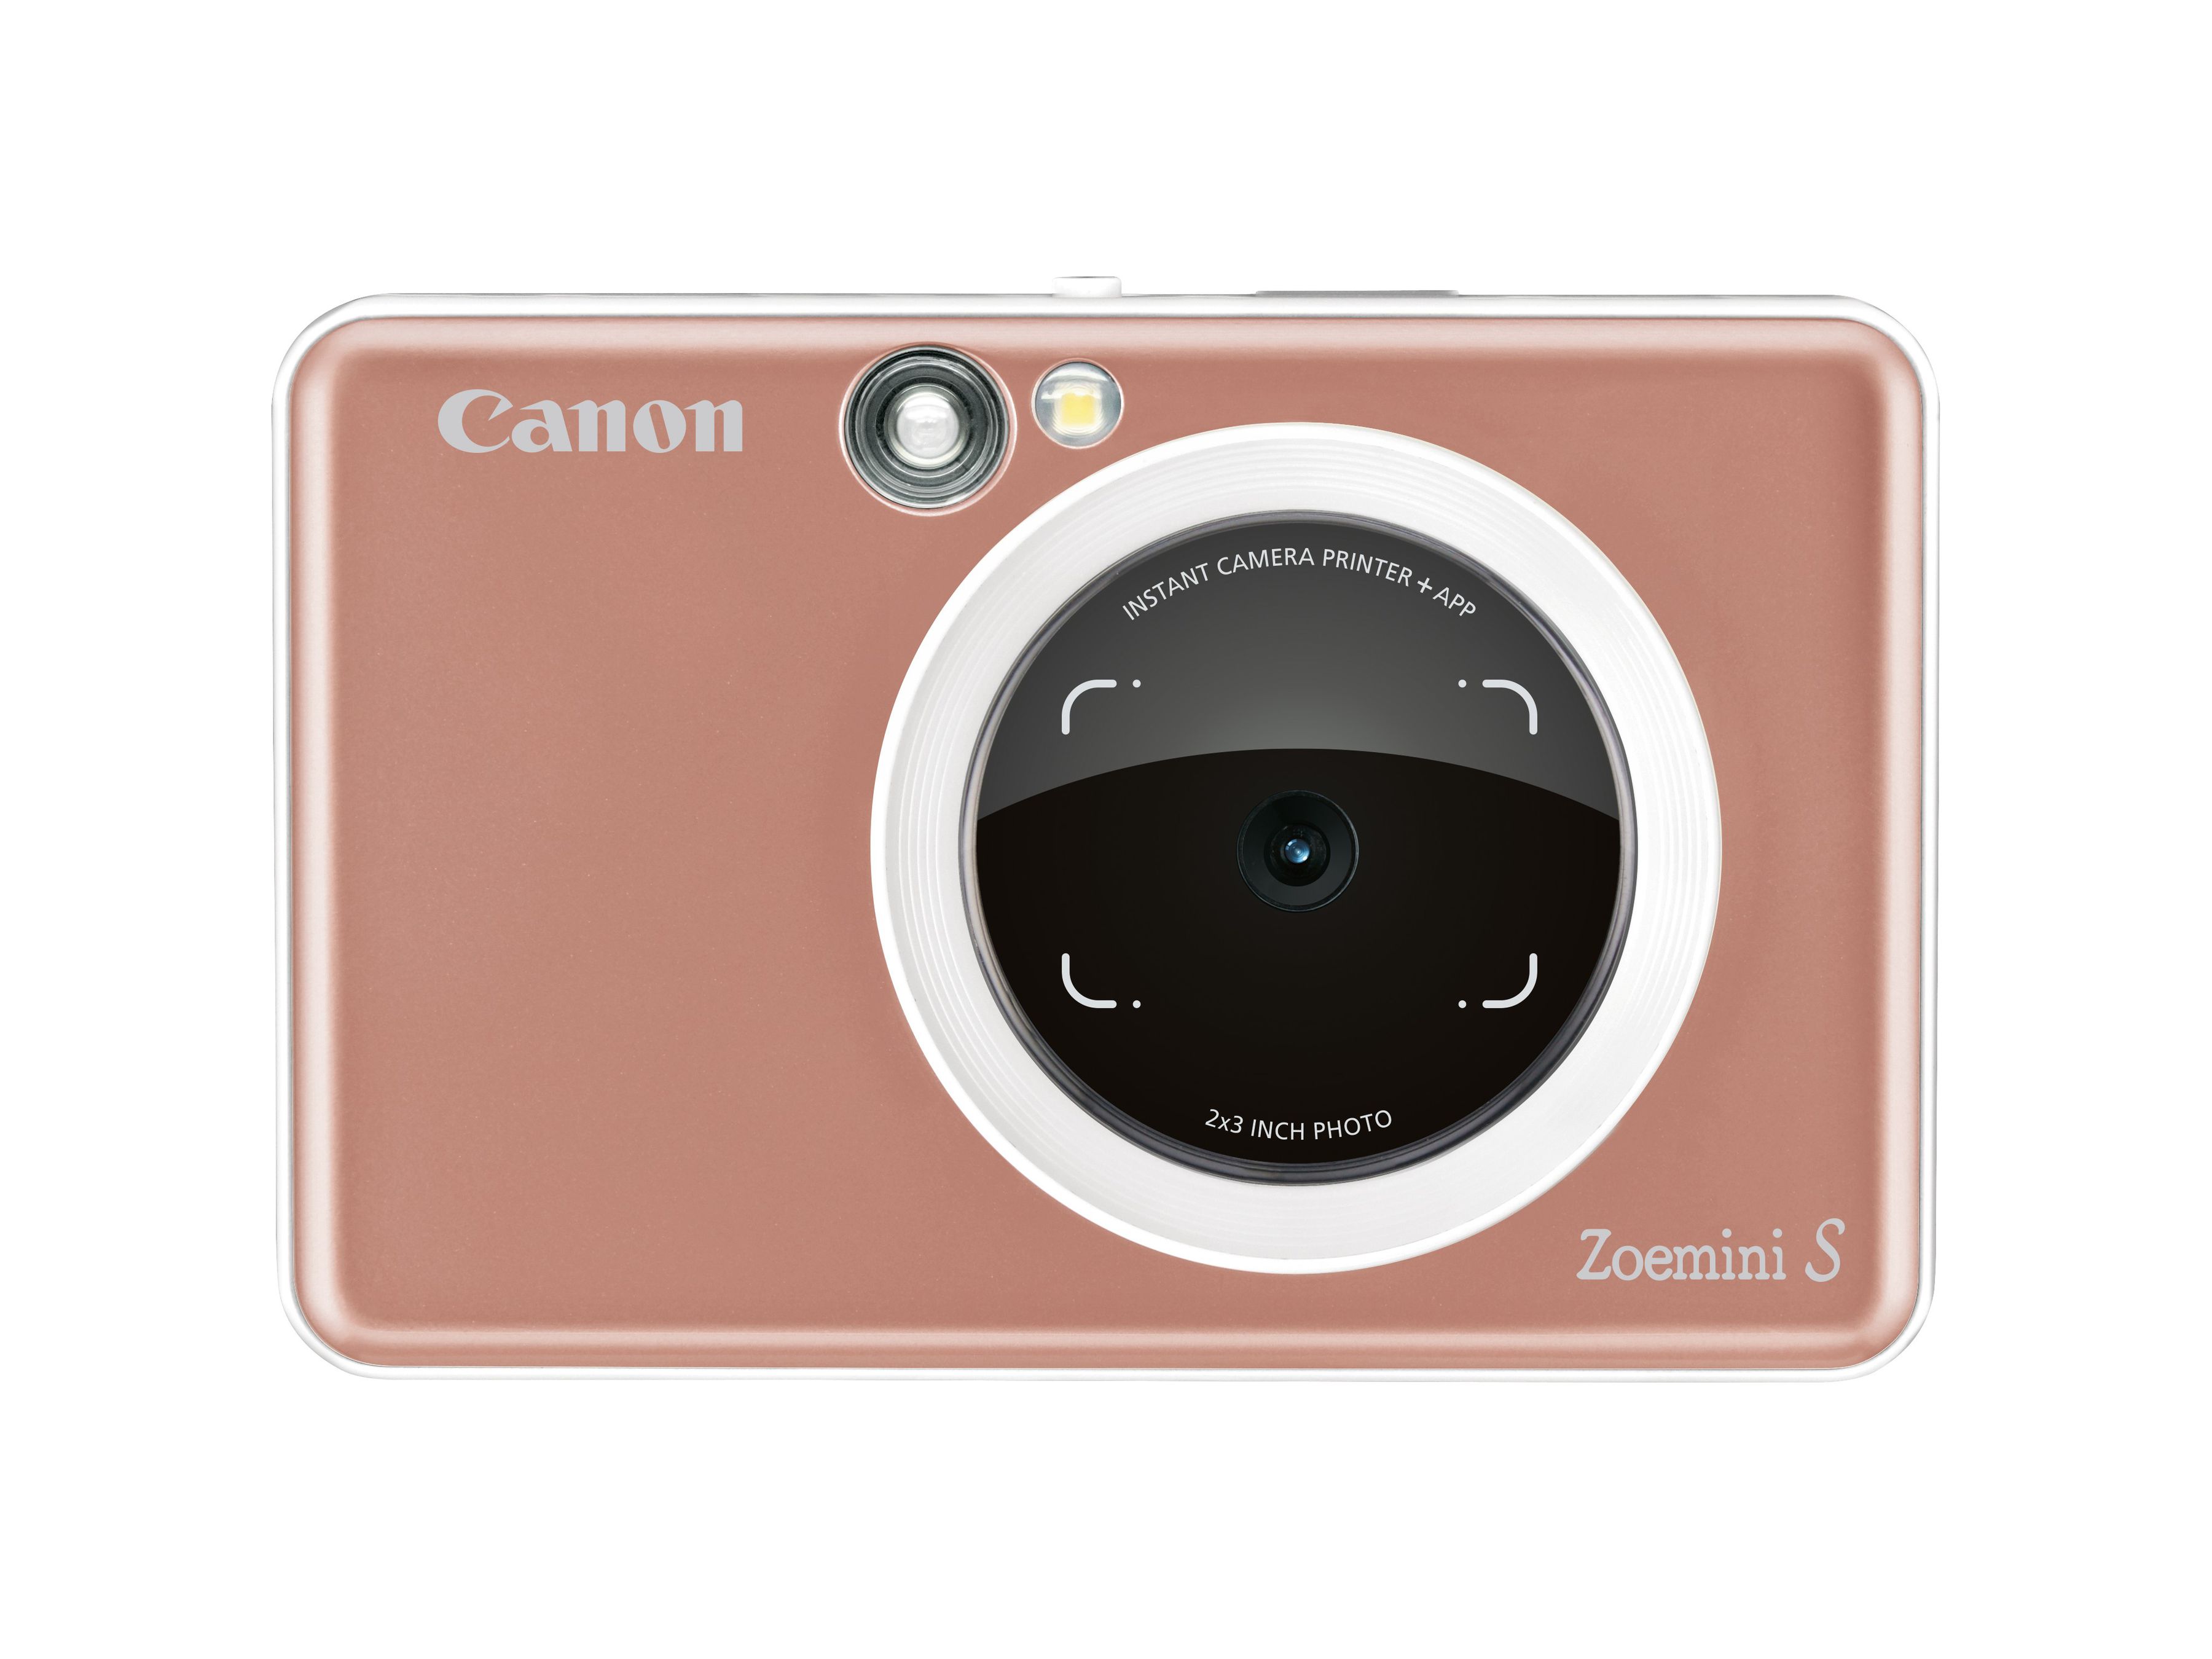 Canon Zoemini 2 Or rosé - engelberger ag